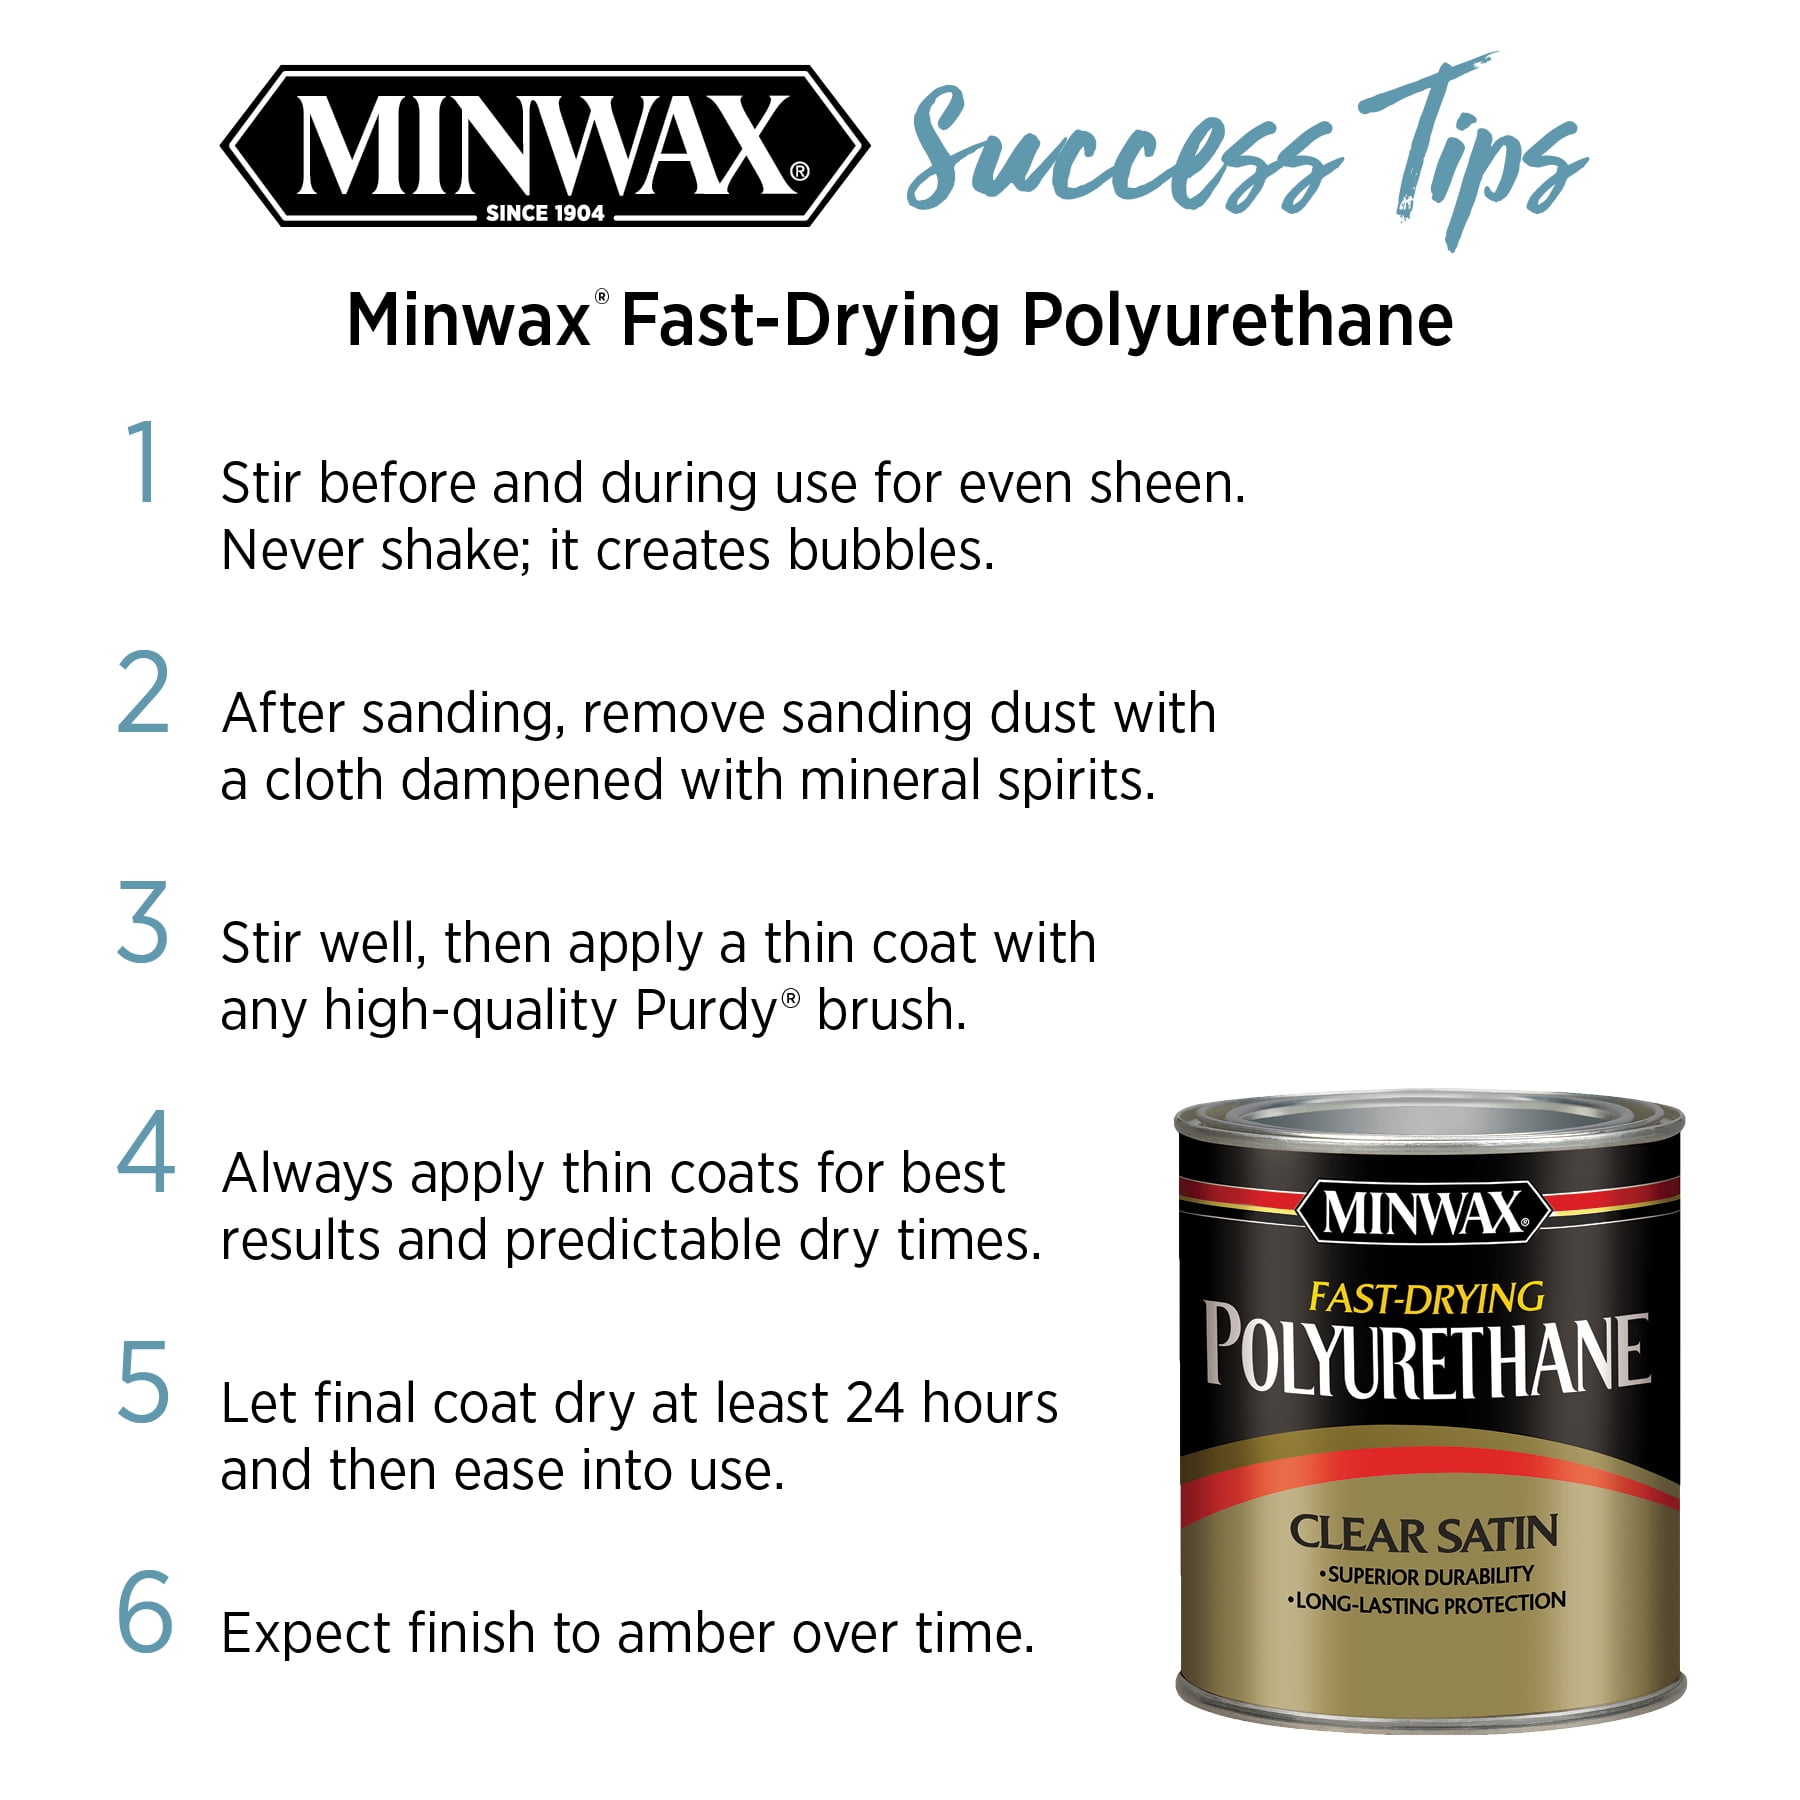 Minwax Clear Semi-Gloss Fast-drying Polyurethane 11.5 oz